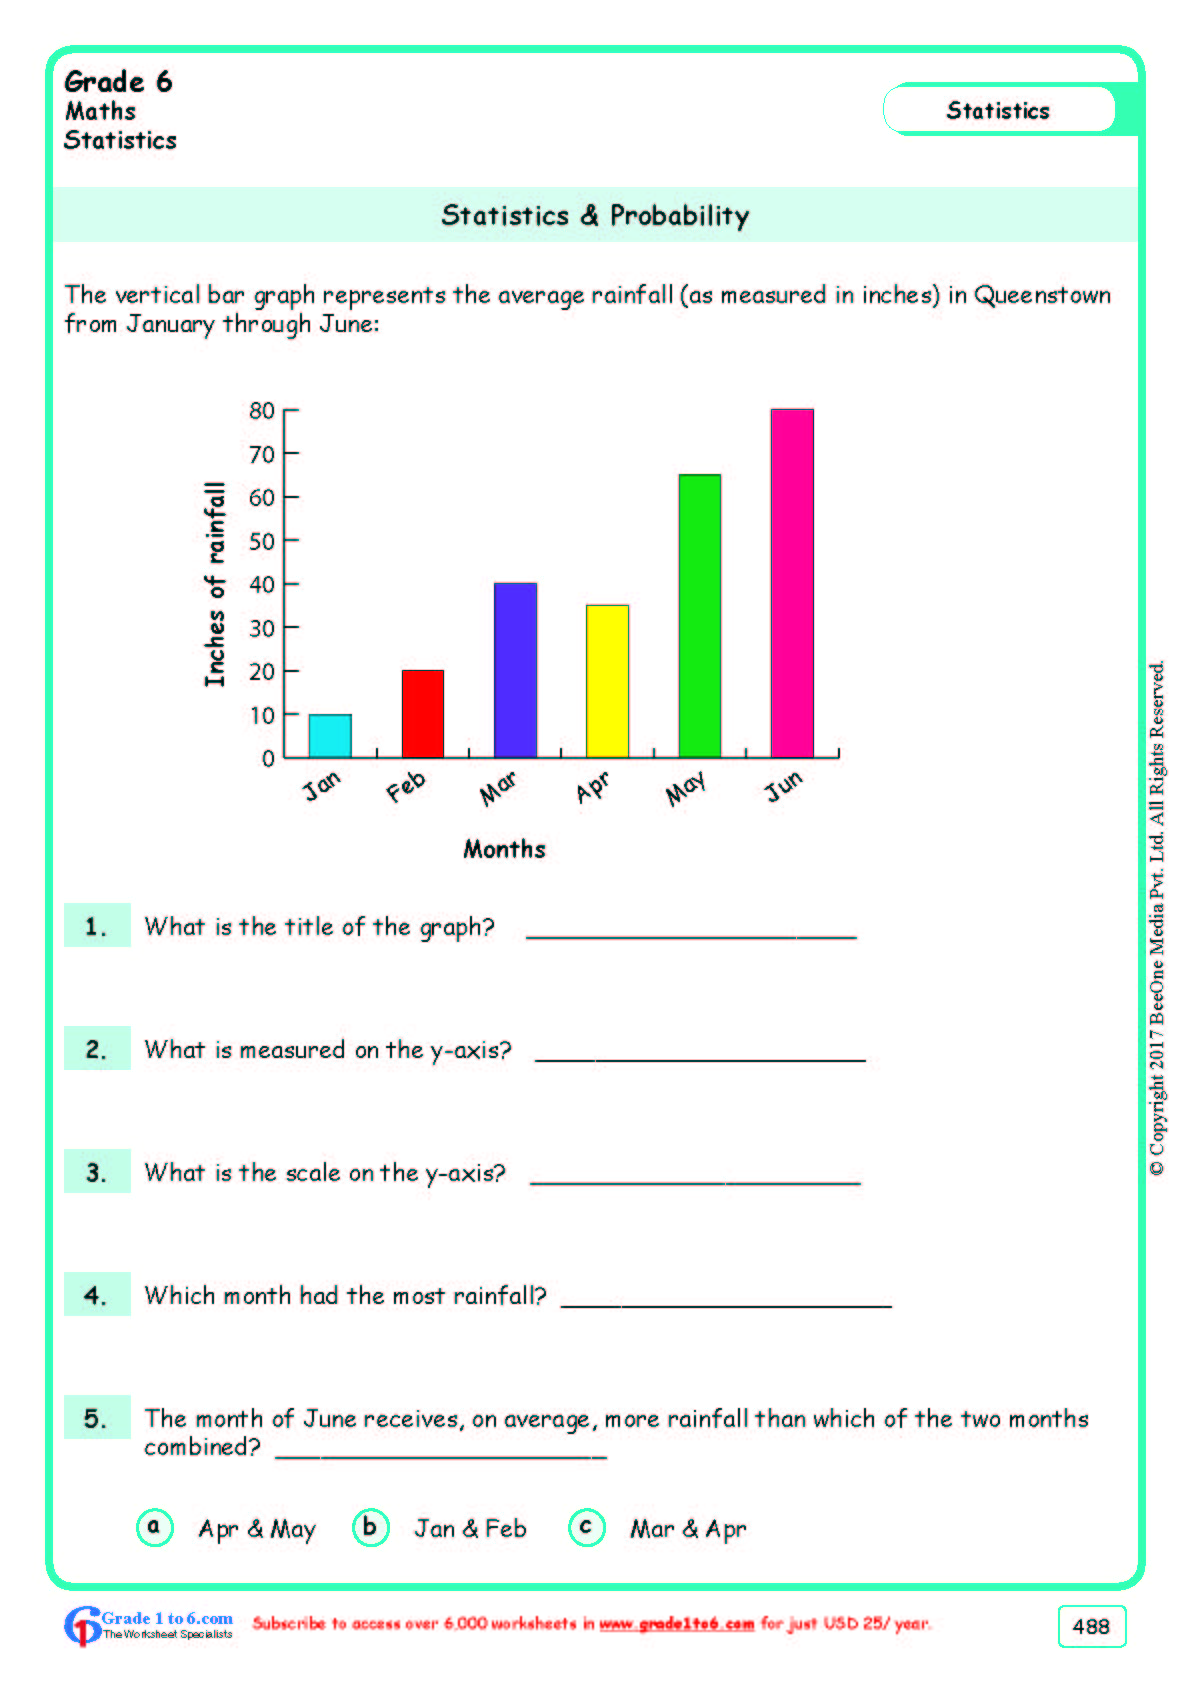 Grade 6|Class Six Statistics Worksheets|www.grade1to6.com